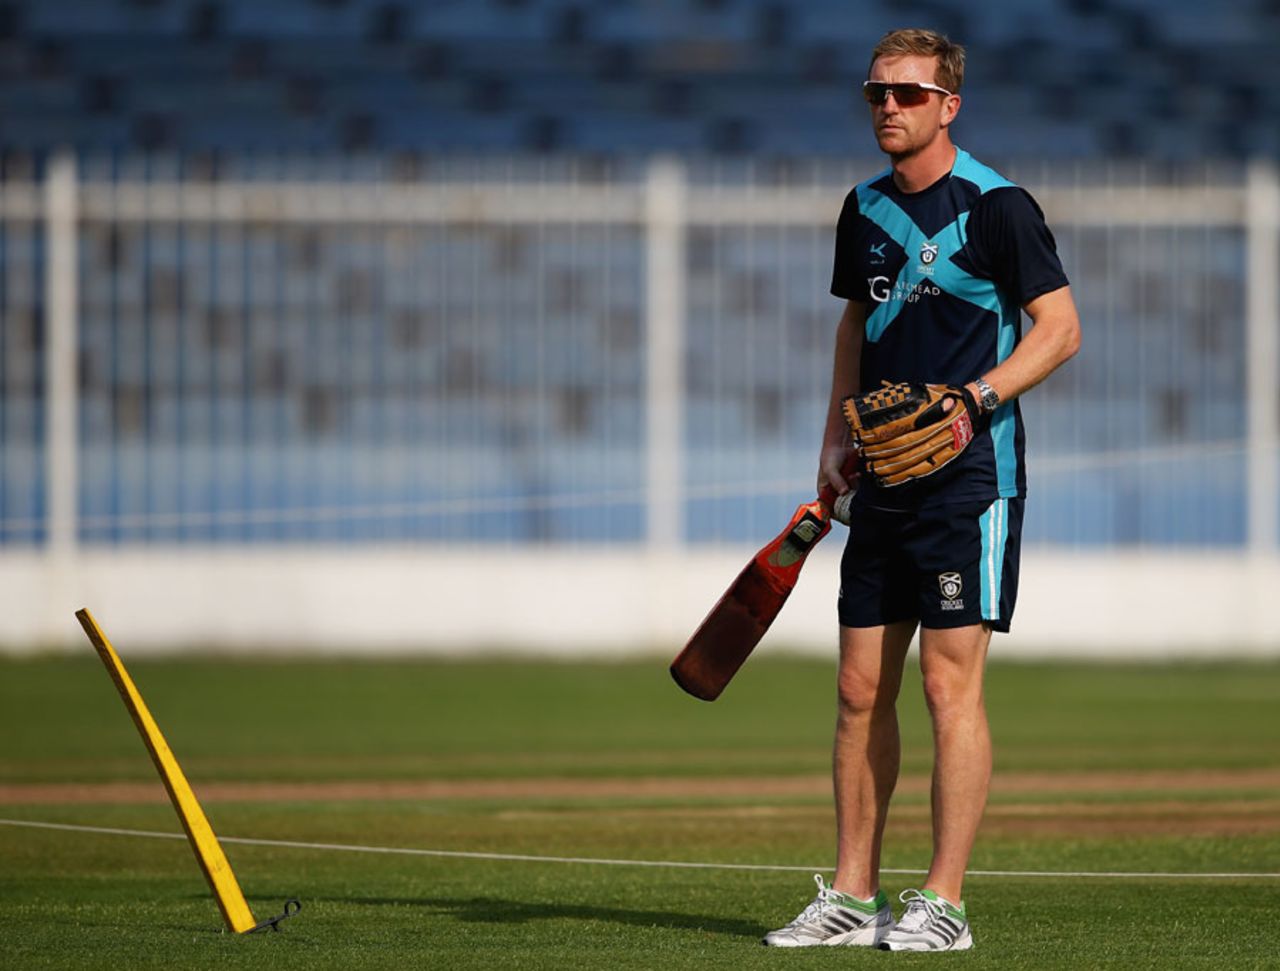 Scotland coach Paul Collingwood runs through some drills, Bermuda v Scotland, ICC World Twenty20 Qualifier, Sharjah, November 15, 2013